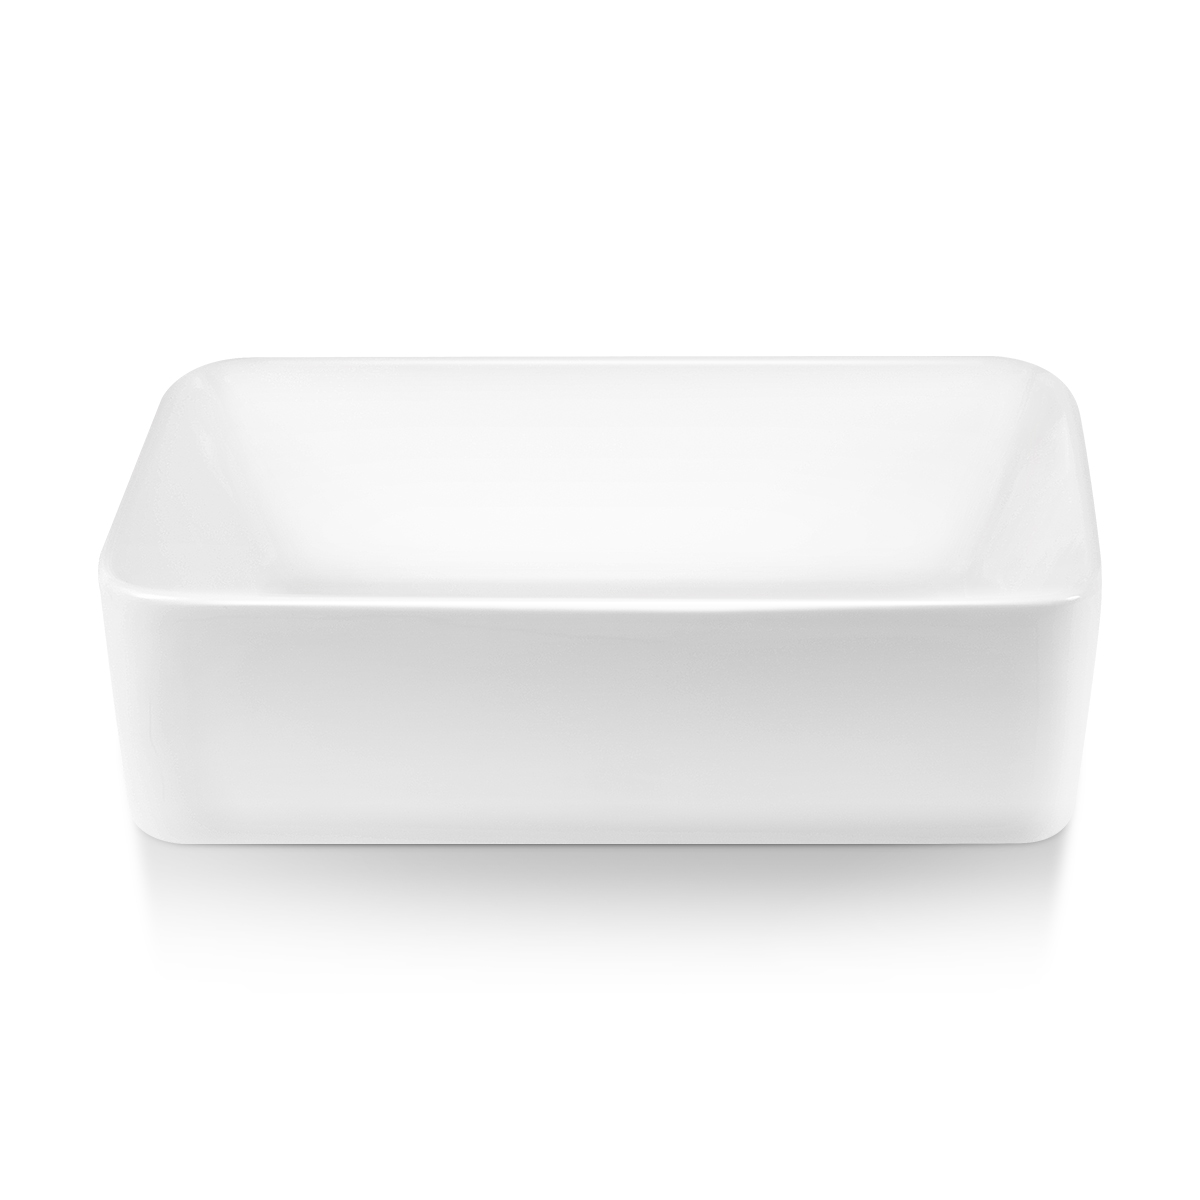 BVS1915A-OL 19" x 15" White Rectangular Ceramic Countertop Bathroom Vanity Vessel Sink